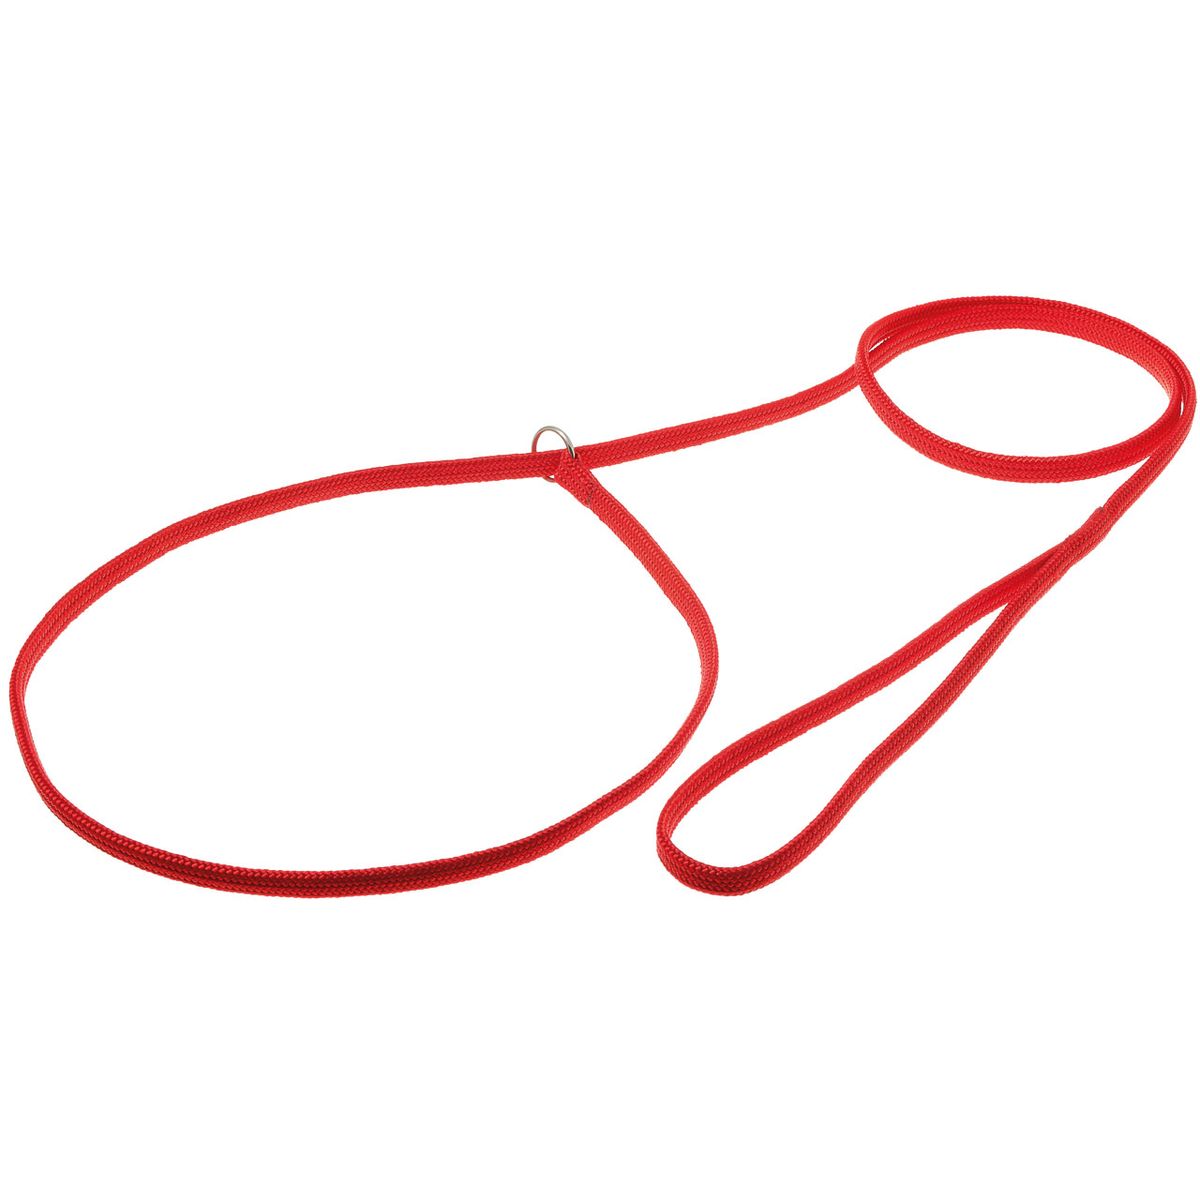 фото Поводок-удавка для собак zooone с кольцом (лента-чулок), красный, 10 мм x 120 см